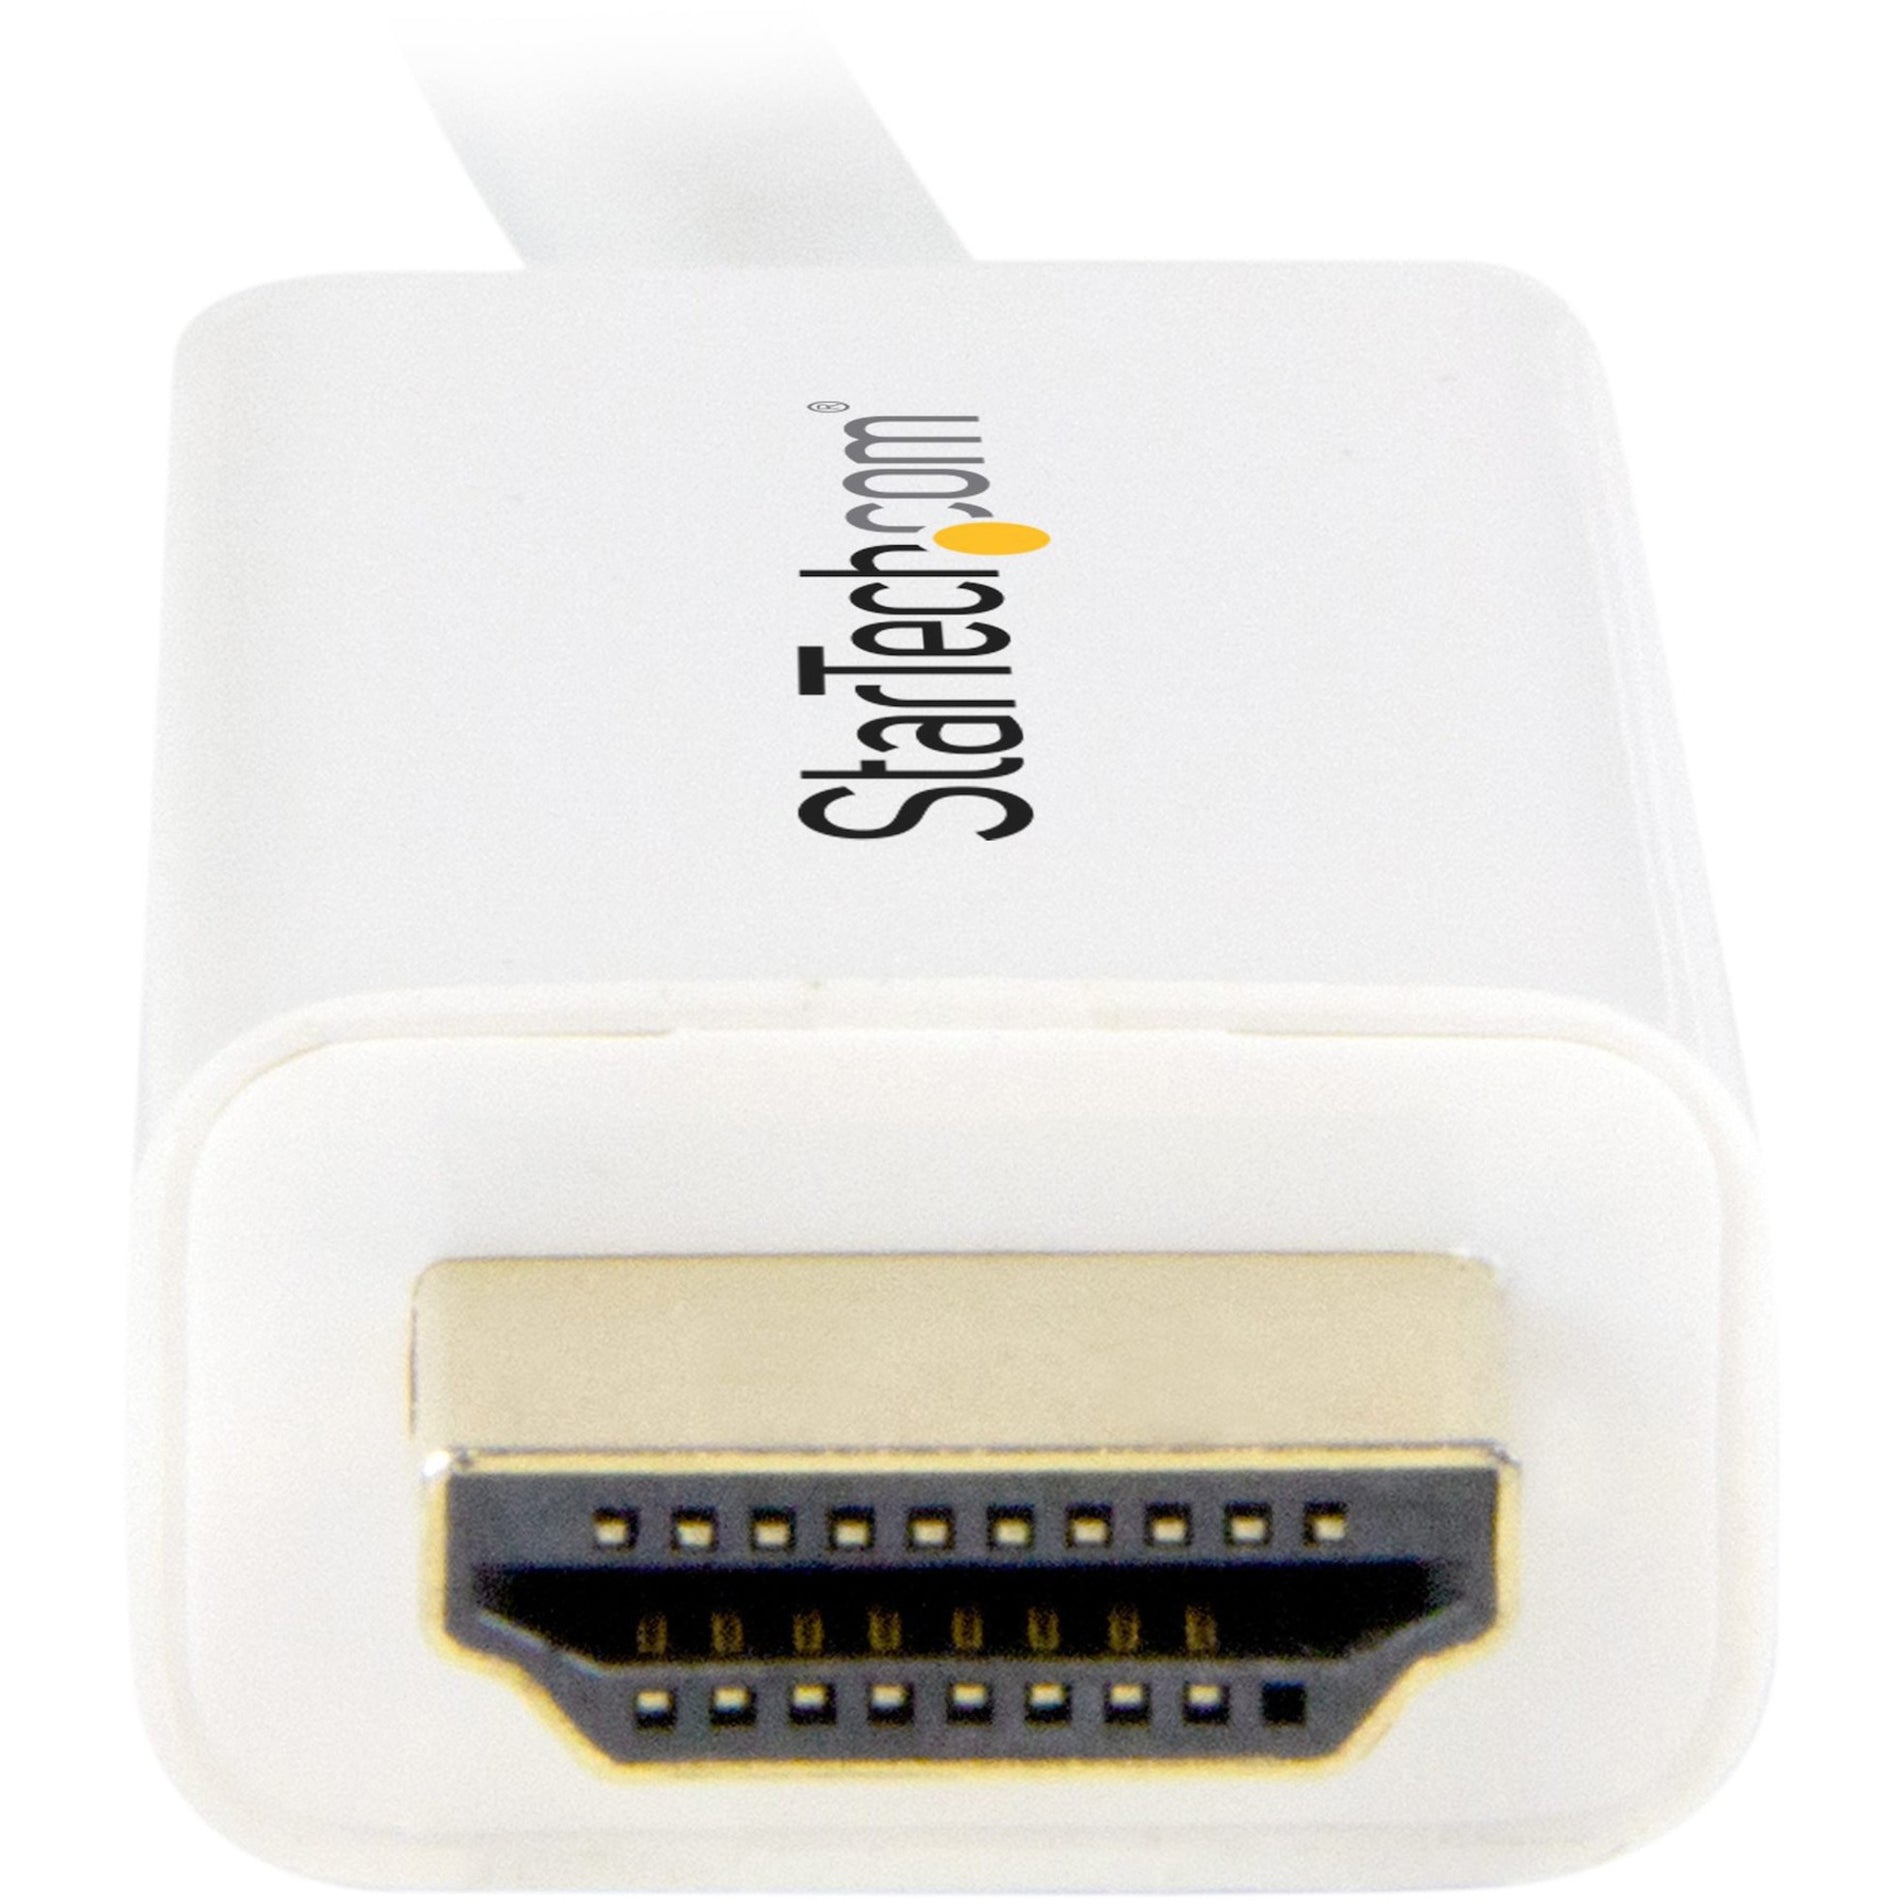 StarTech.com -> StarTech.com (Marca: StarTech.com) MDP2HDMM2MW -> MDP2HDMM2MW Mini -> Mini DisplayPort -> DisplayPort to -> a HDMI -> HDMI Converter -> Convertidor Cable -> Cable 6 ft (2m) -> 6 pies (2m) 4K -> 4K White -> Blanco